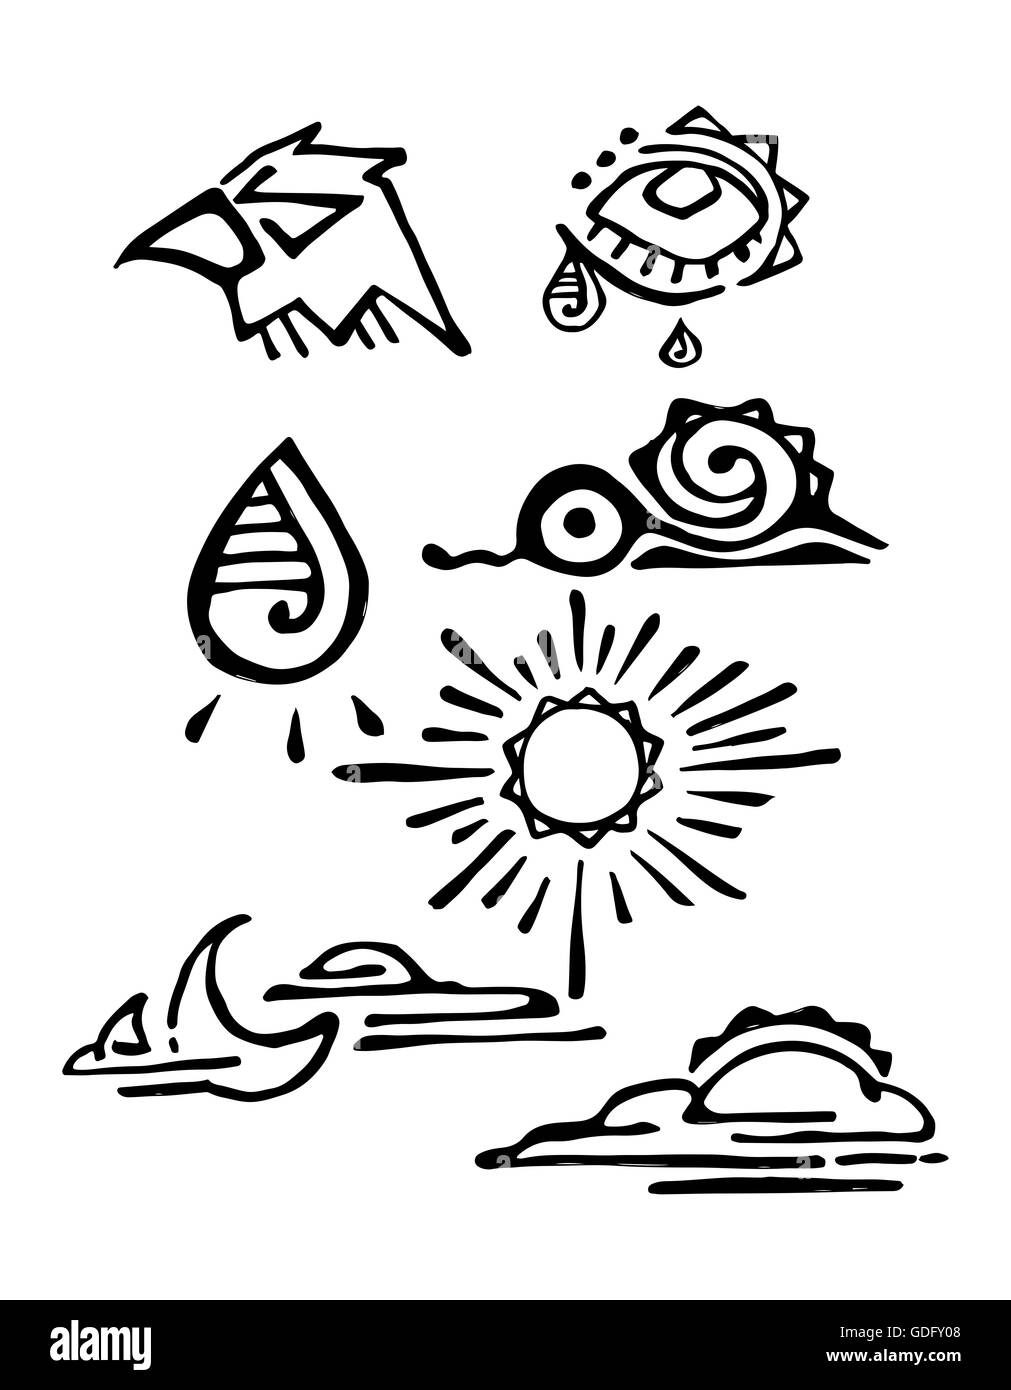 Hand drawn illustration or drawing of some prehispanic ethnic indigenous symbols Stock Photo